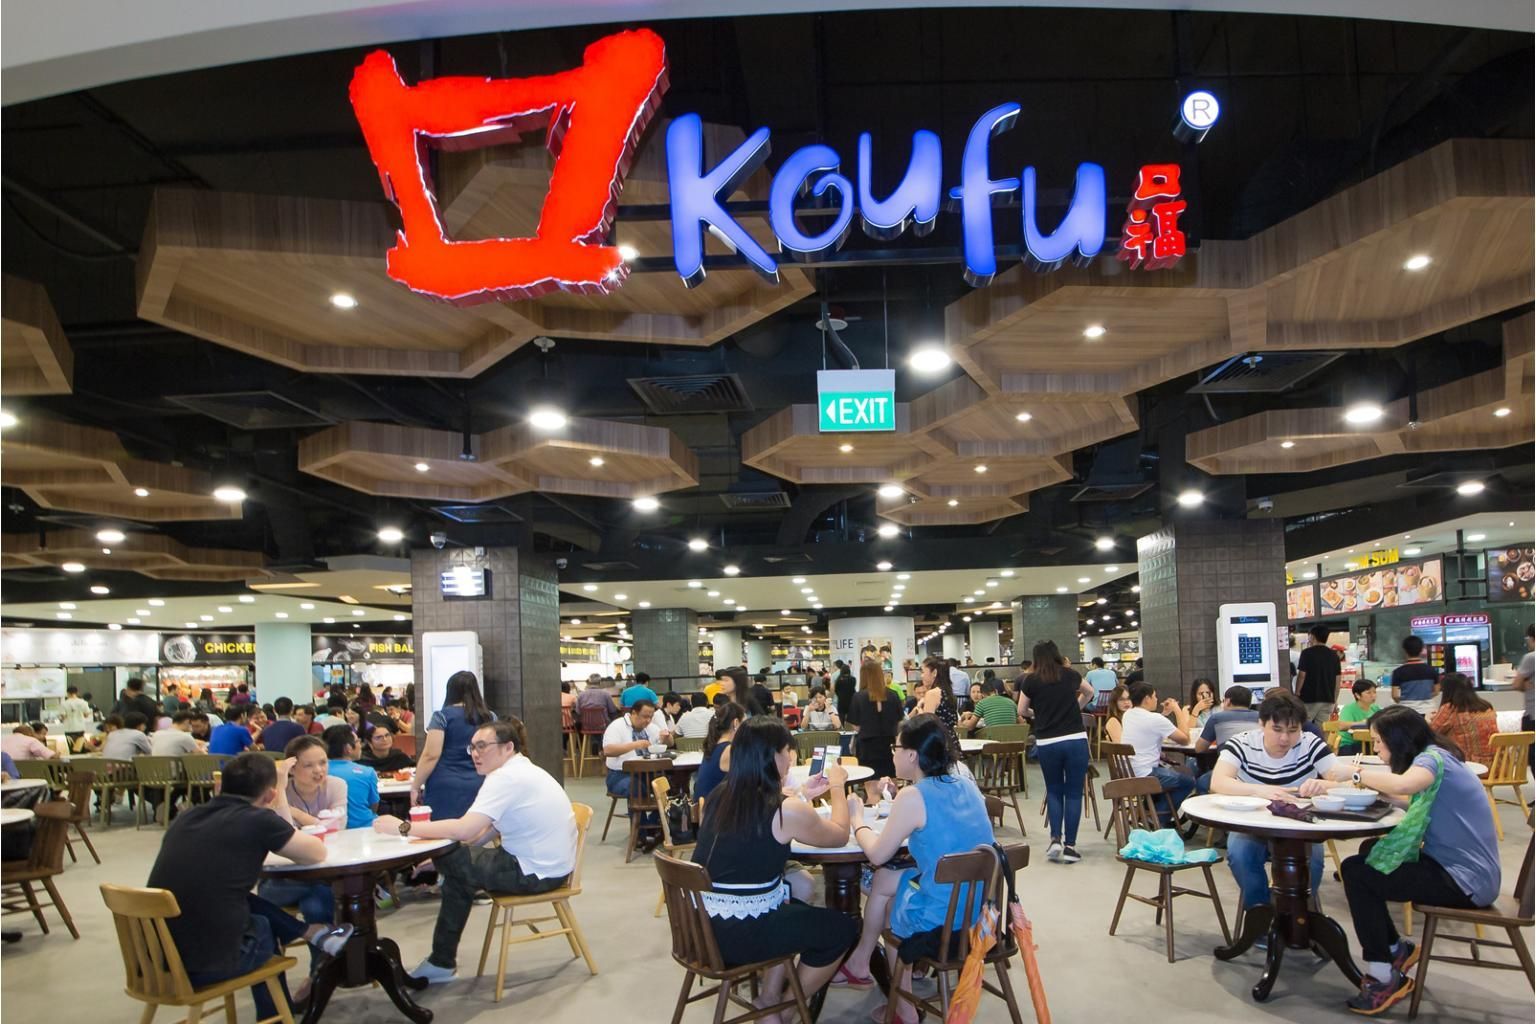 koufu food court megapos pos system